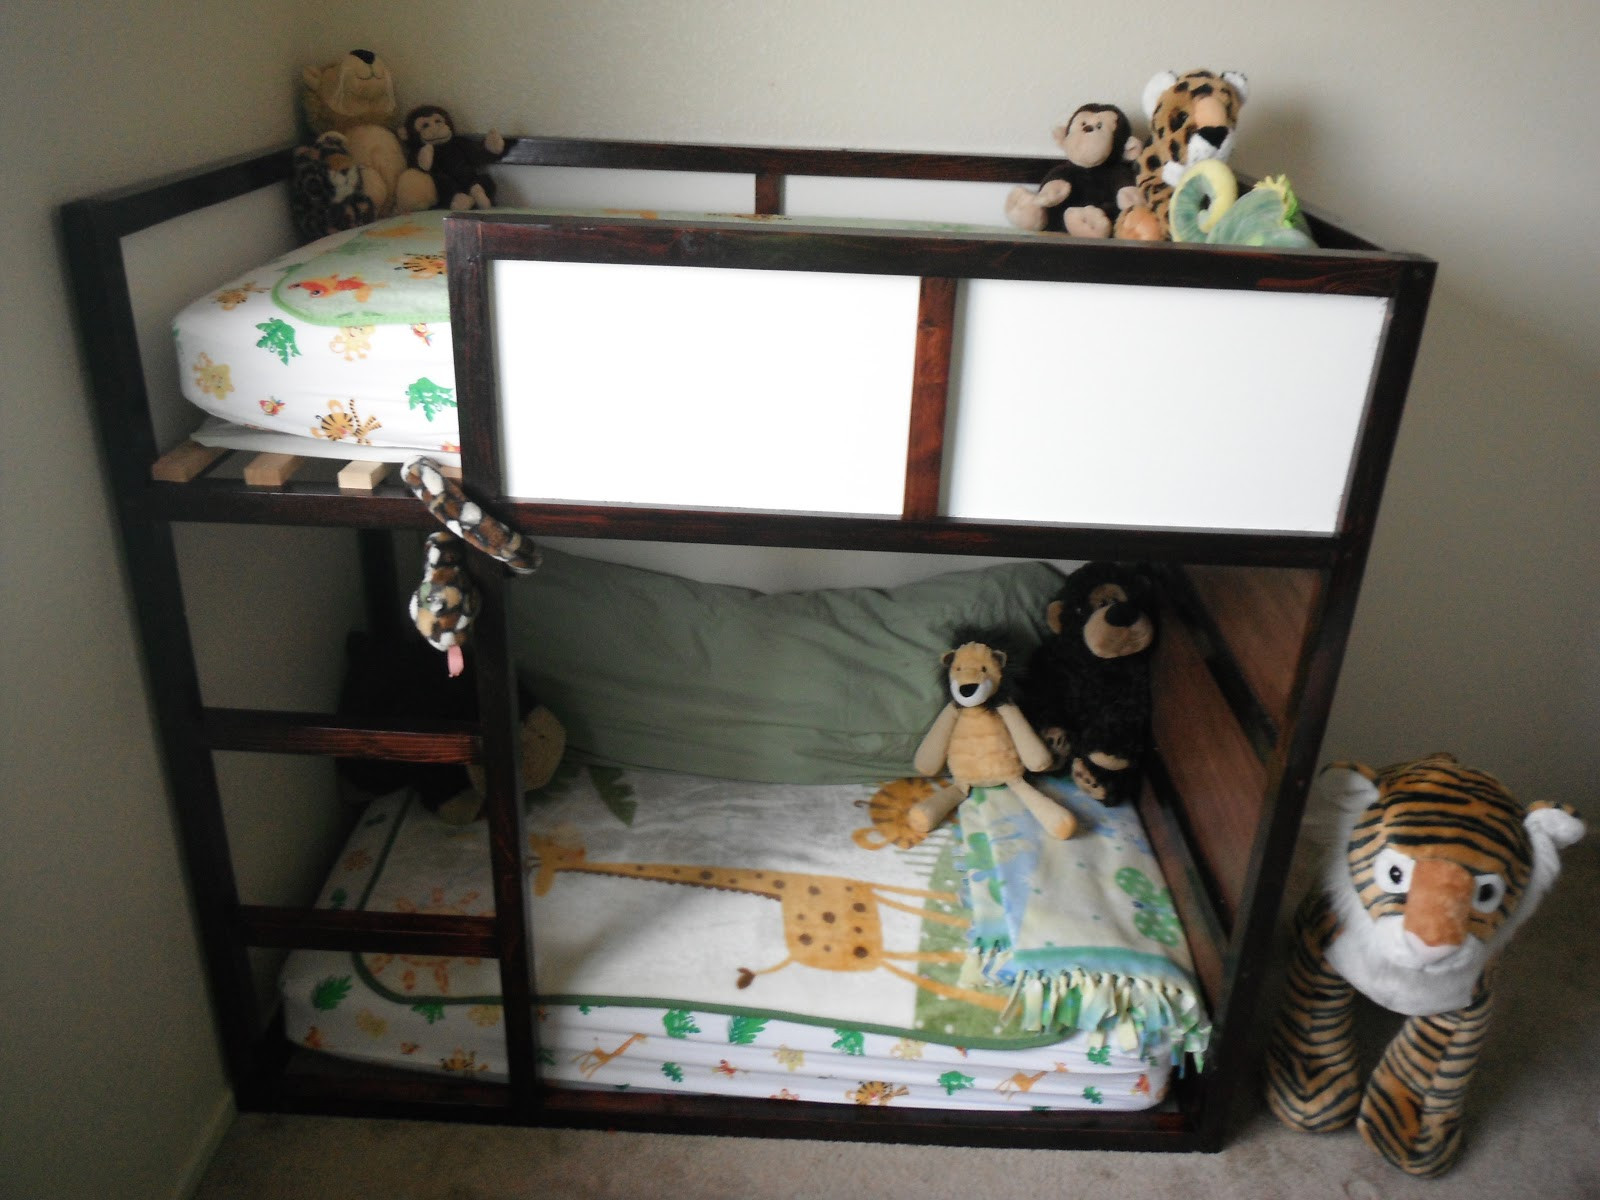 DIY Toddler Bunk Bed
 Crafting Weasels Toddler Bunk Bed